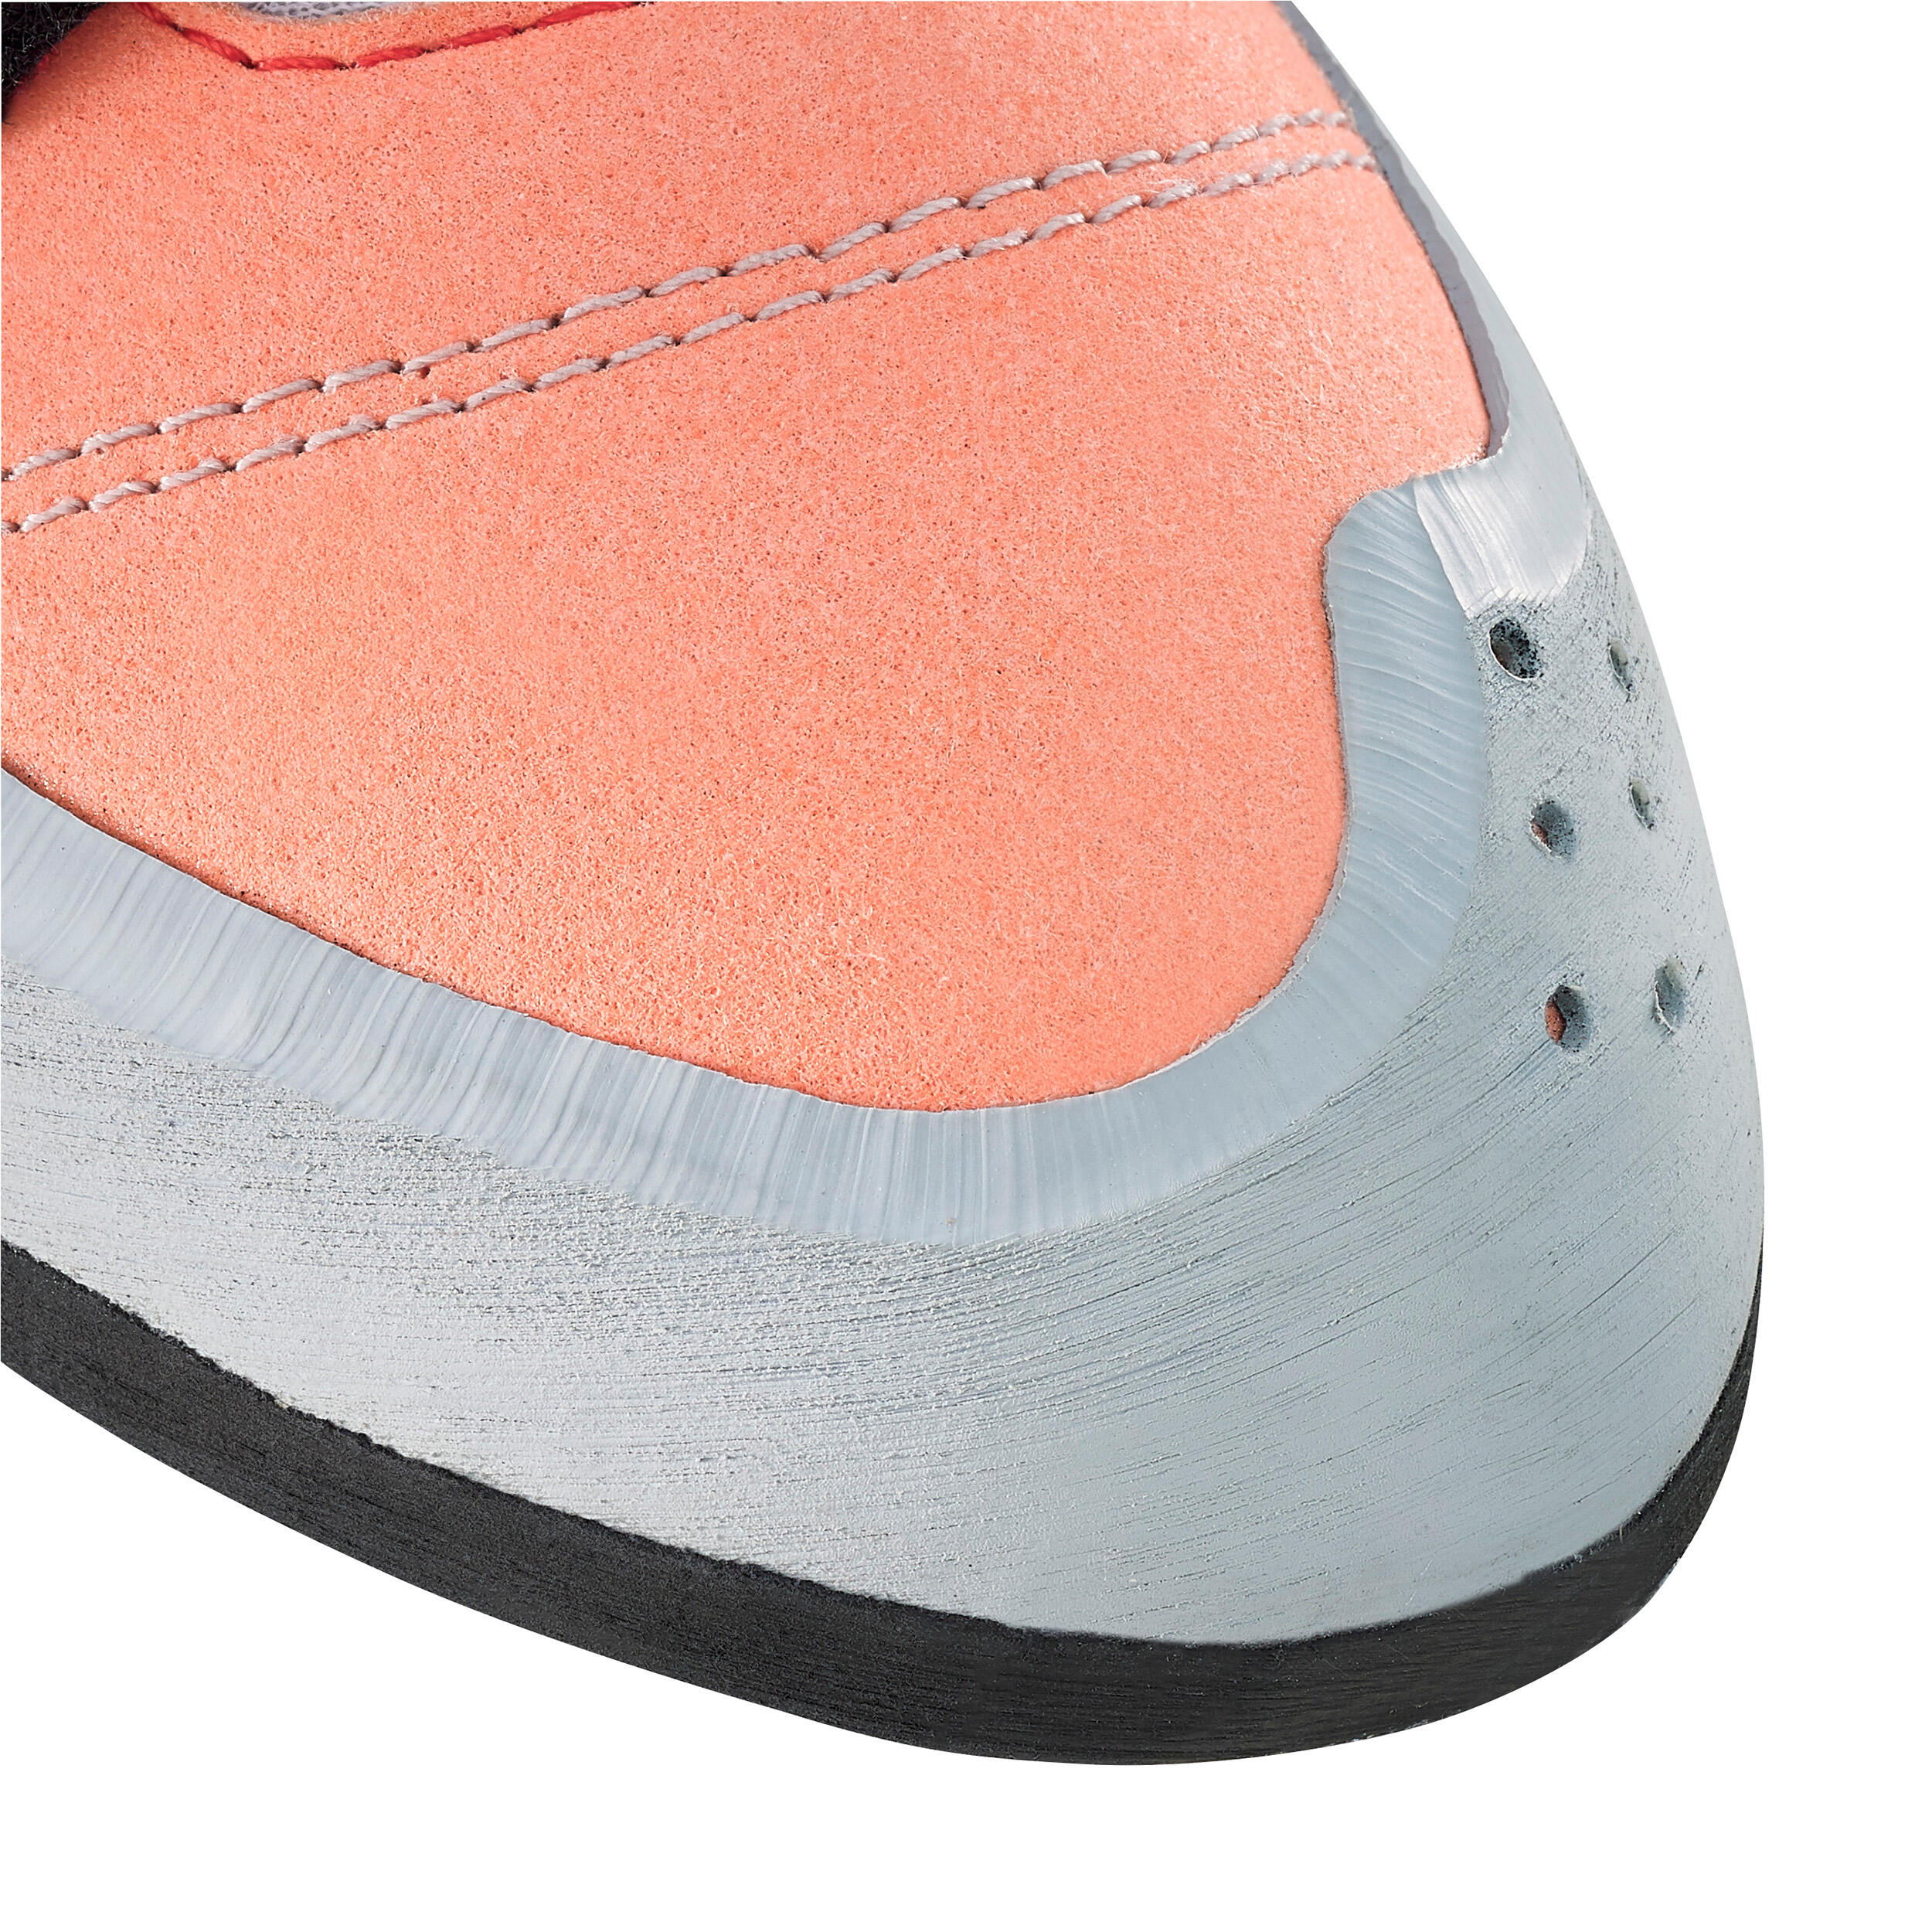 Comfortable rock climbing shoes, coral 9/12